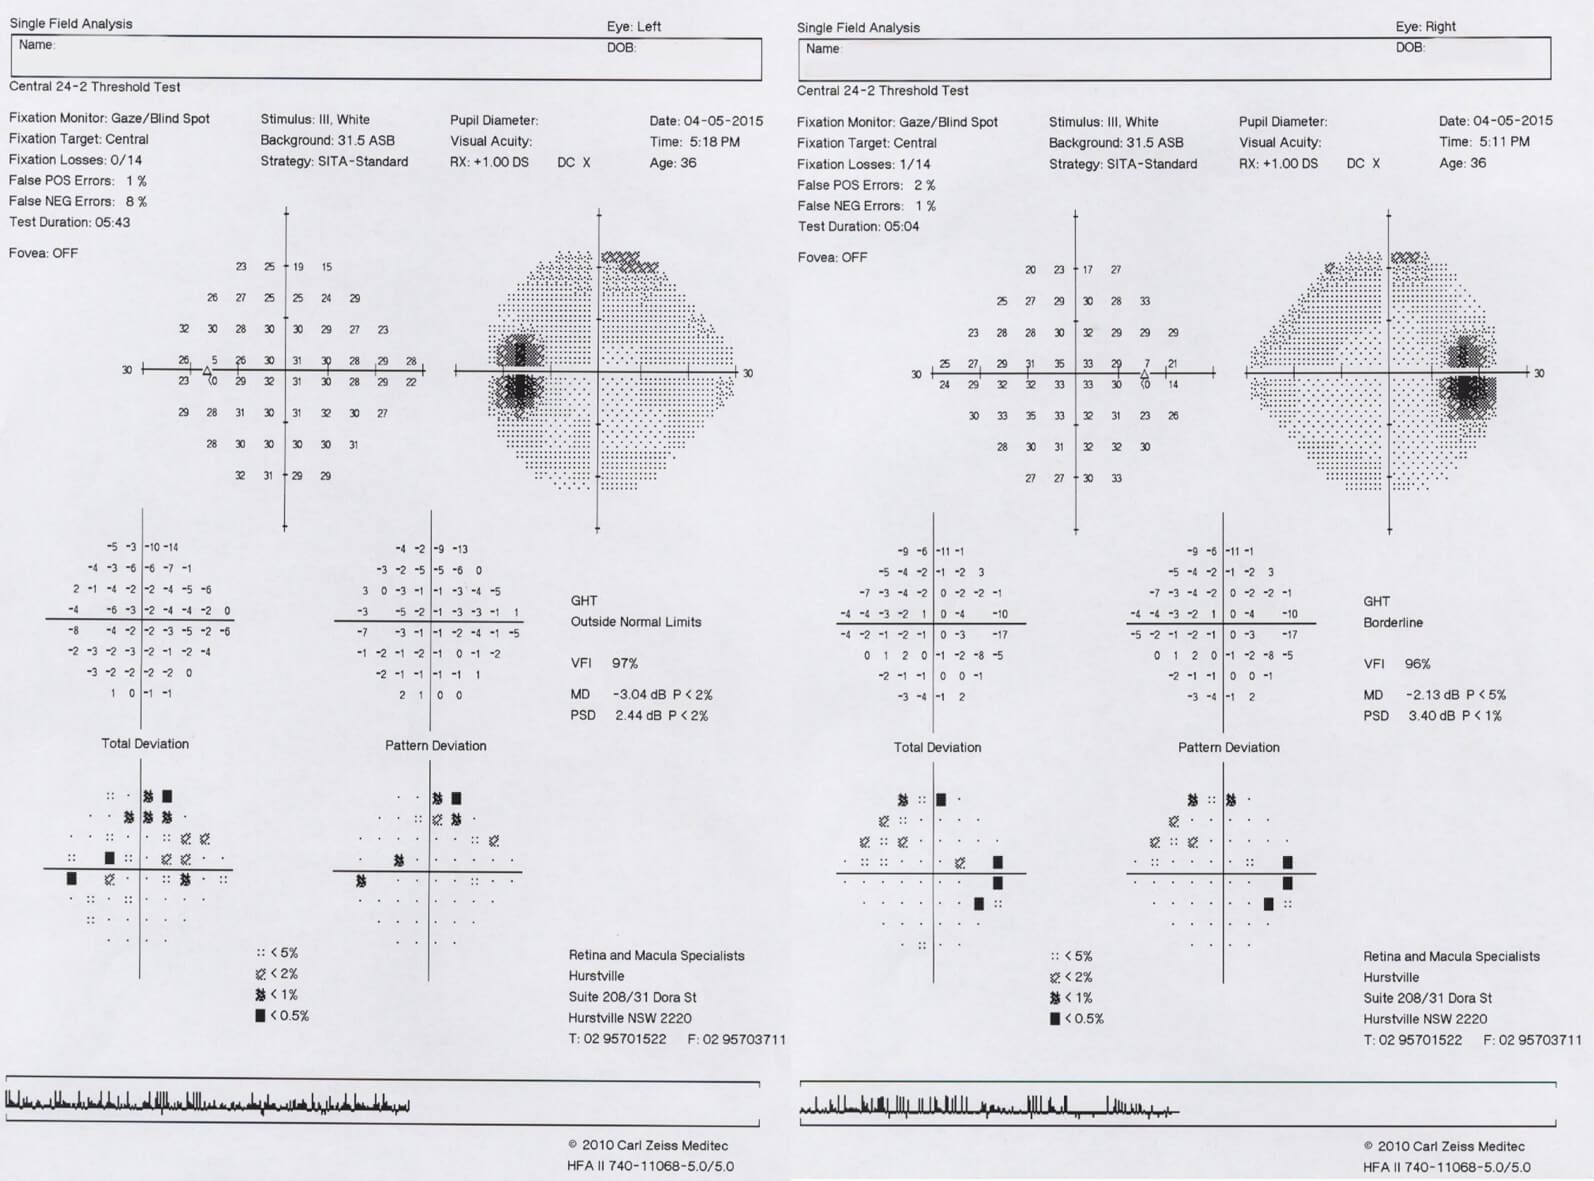  Humphrey Visual Field tests showing bilateral enlarged blind spots.